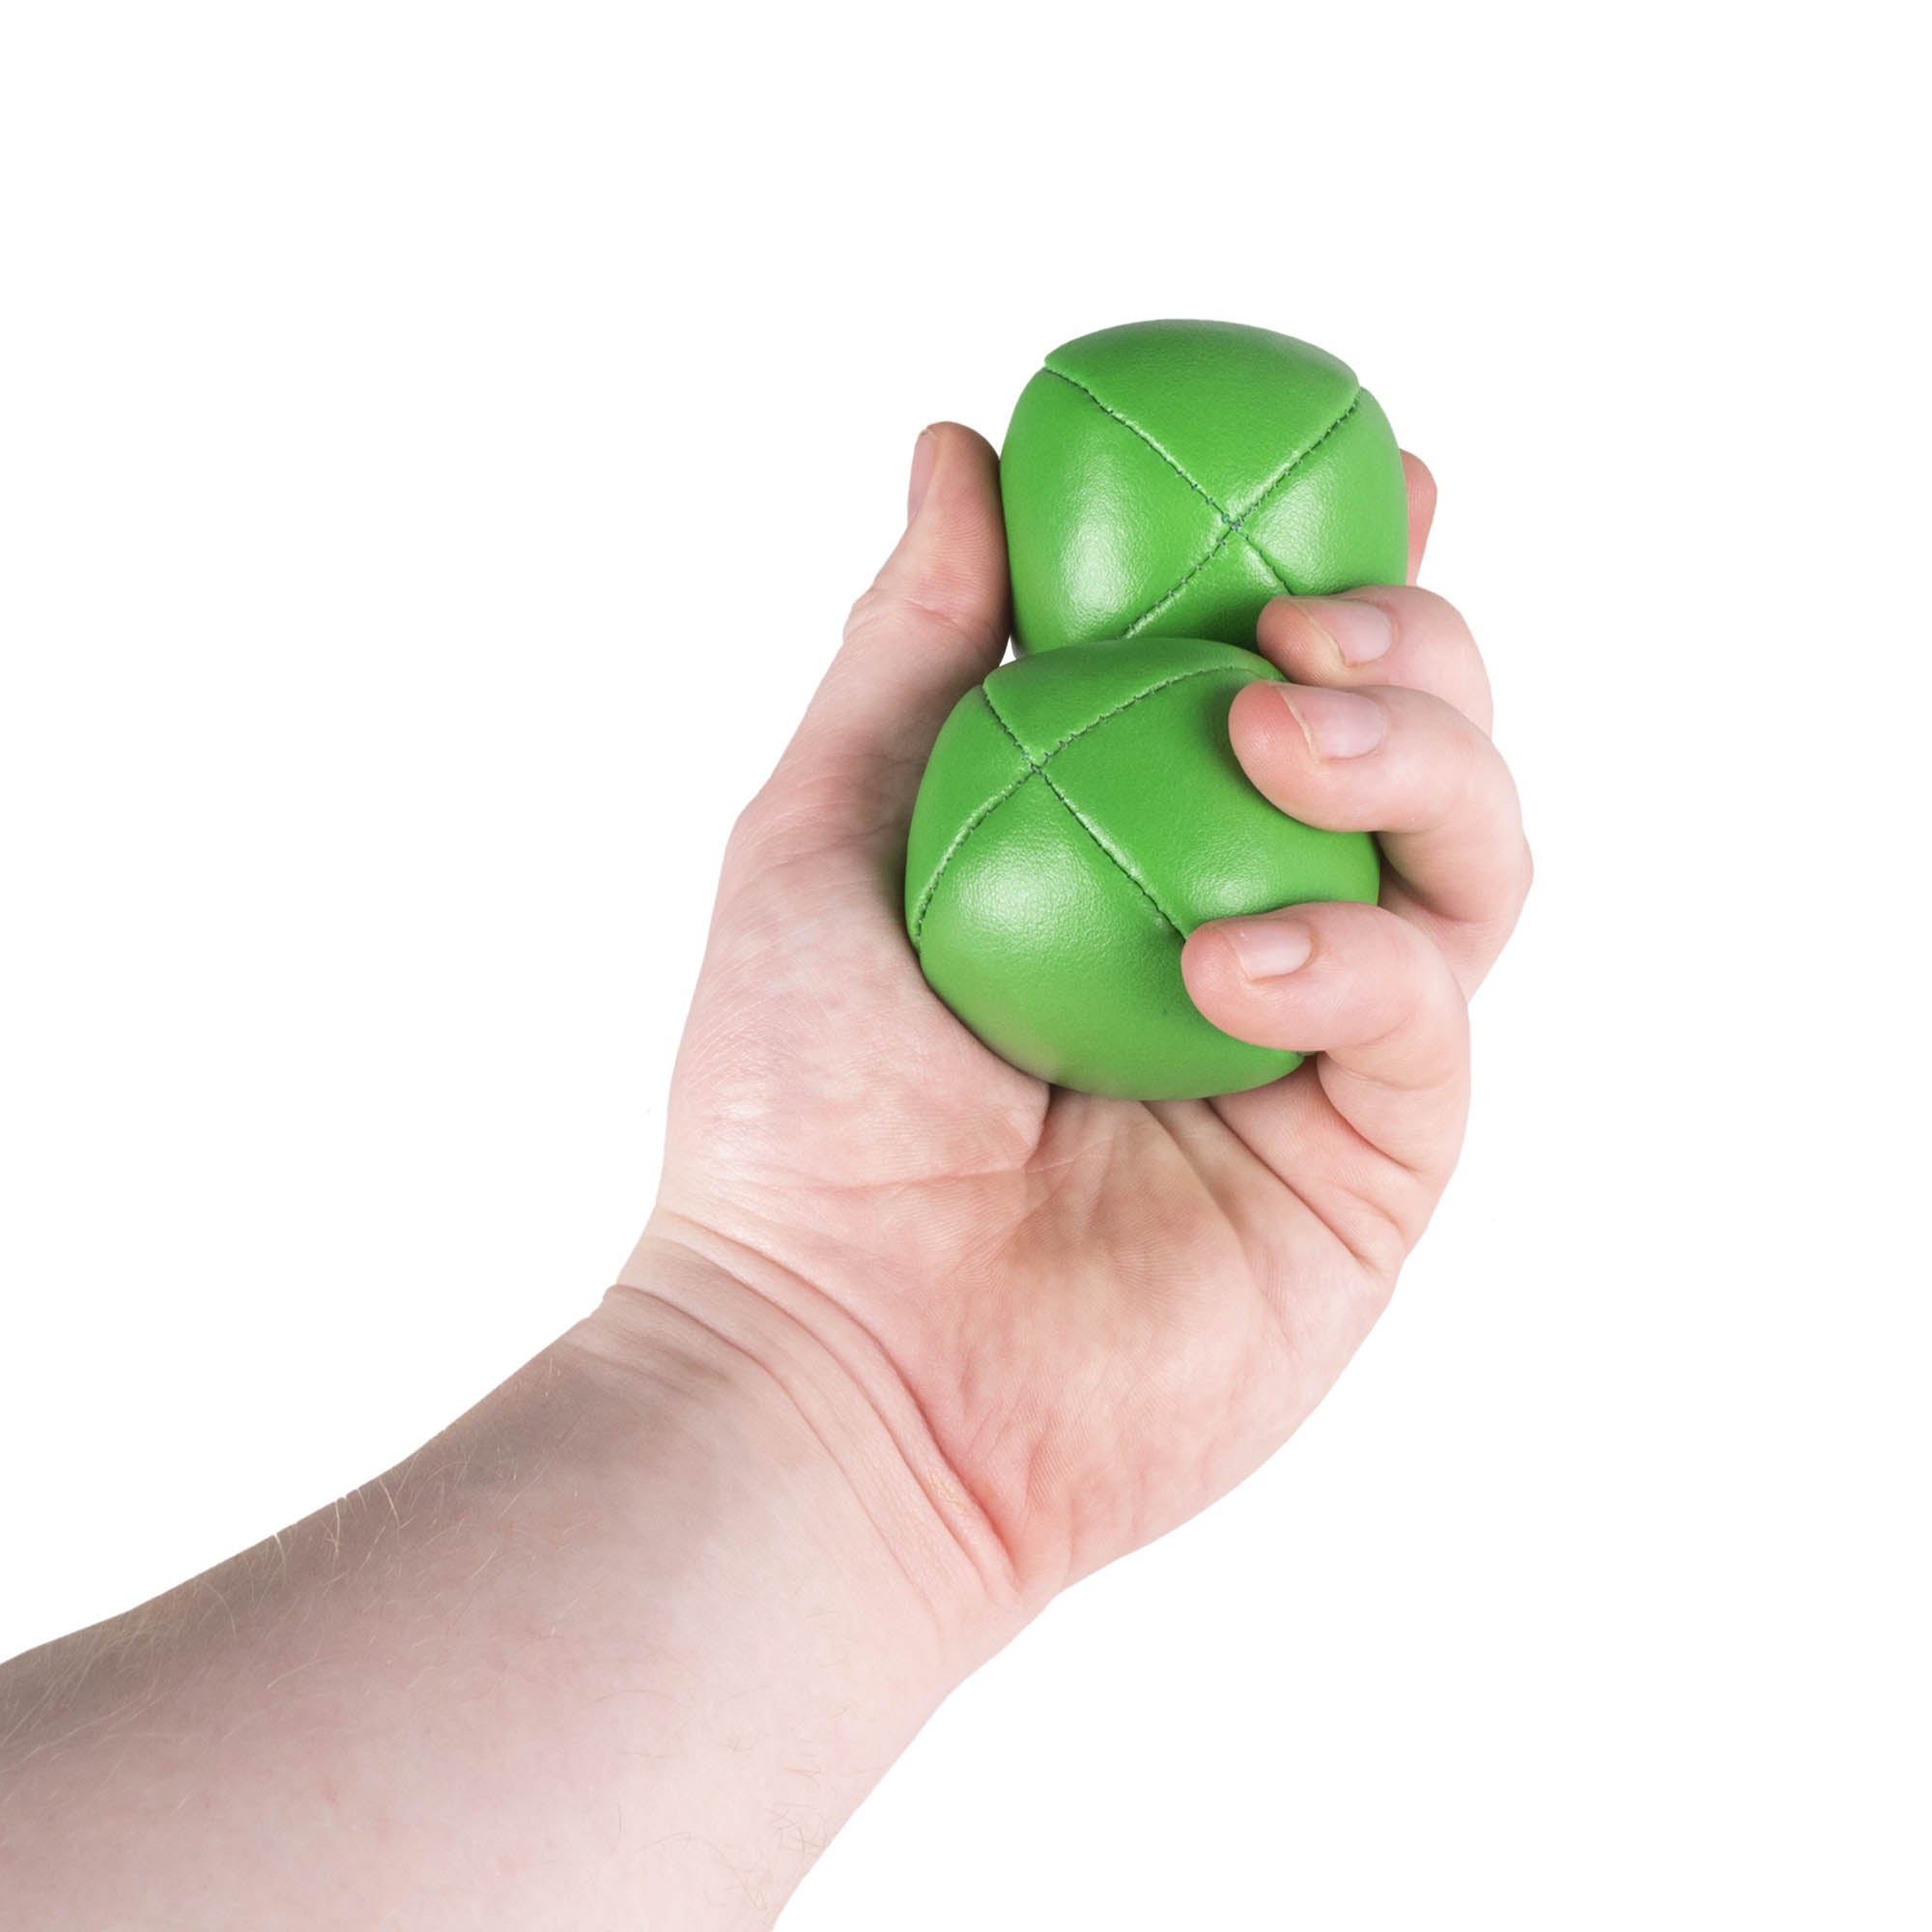 2 green balls in hand